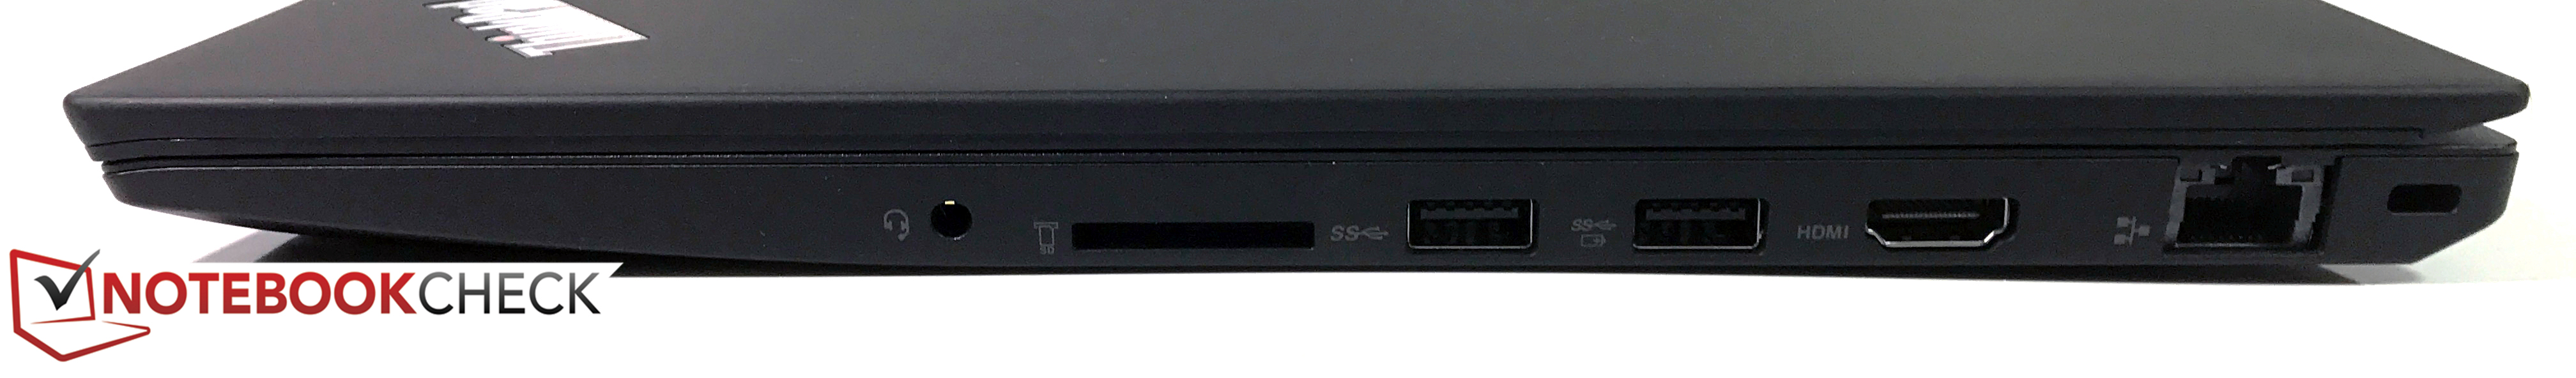 rechts: 3,5-mm-Audio, SD-Kartenleser, 2x USB 3.0 (1x Always-on), HDMI 1.4b, RJ45-LAN, Kensington Lock